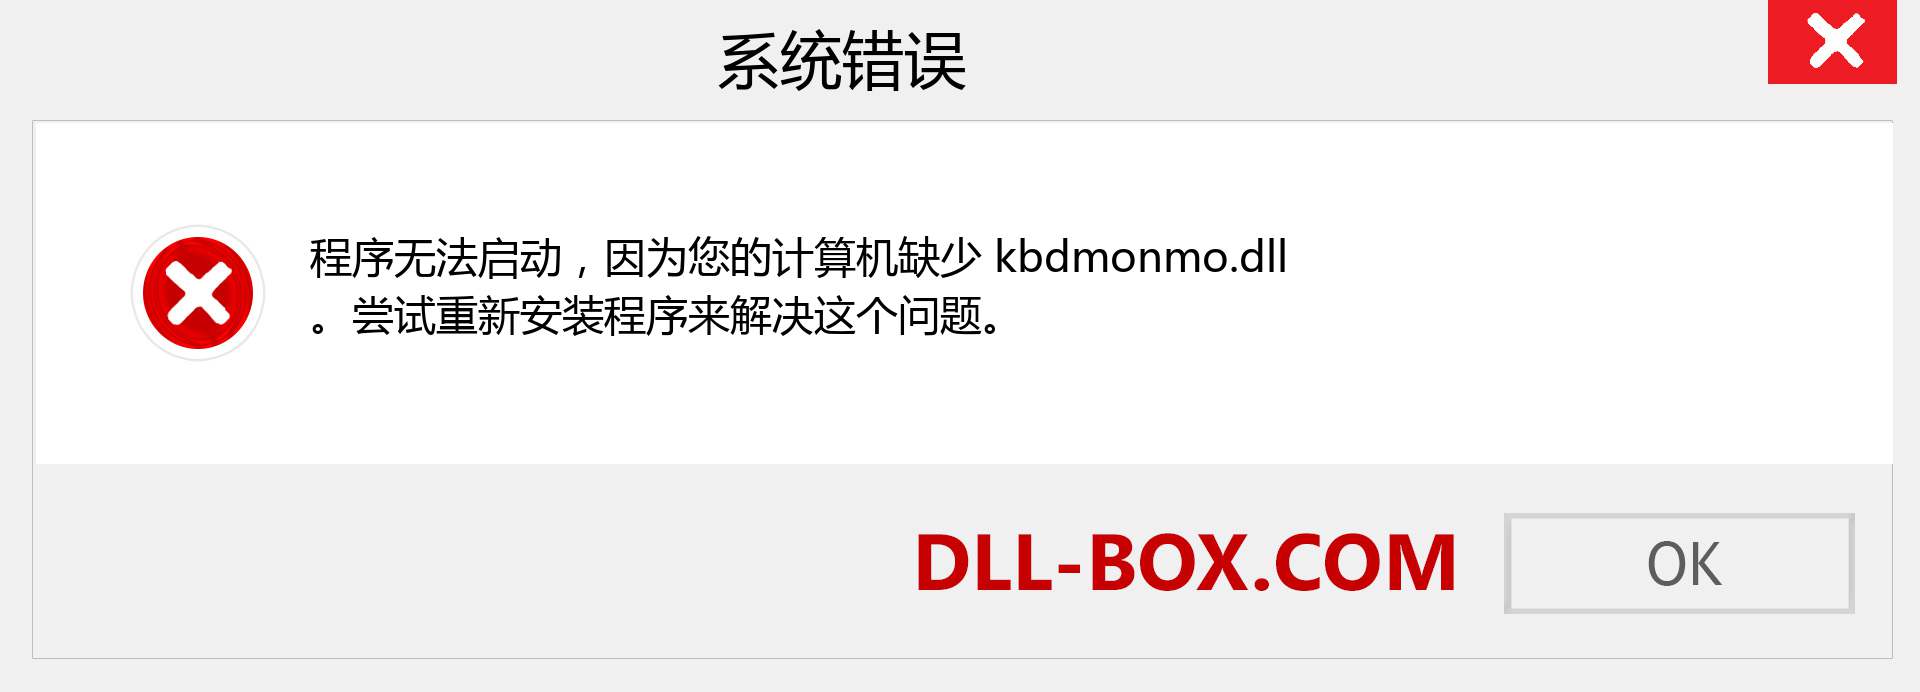 kbdmonmo.dll 文件丢失？。 适用于 Windows 7、8、10 的下载 - 修复 Windows、照片、图像上的 kbdmonmo dll 丢失错误